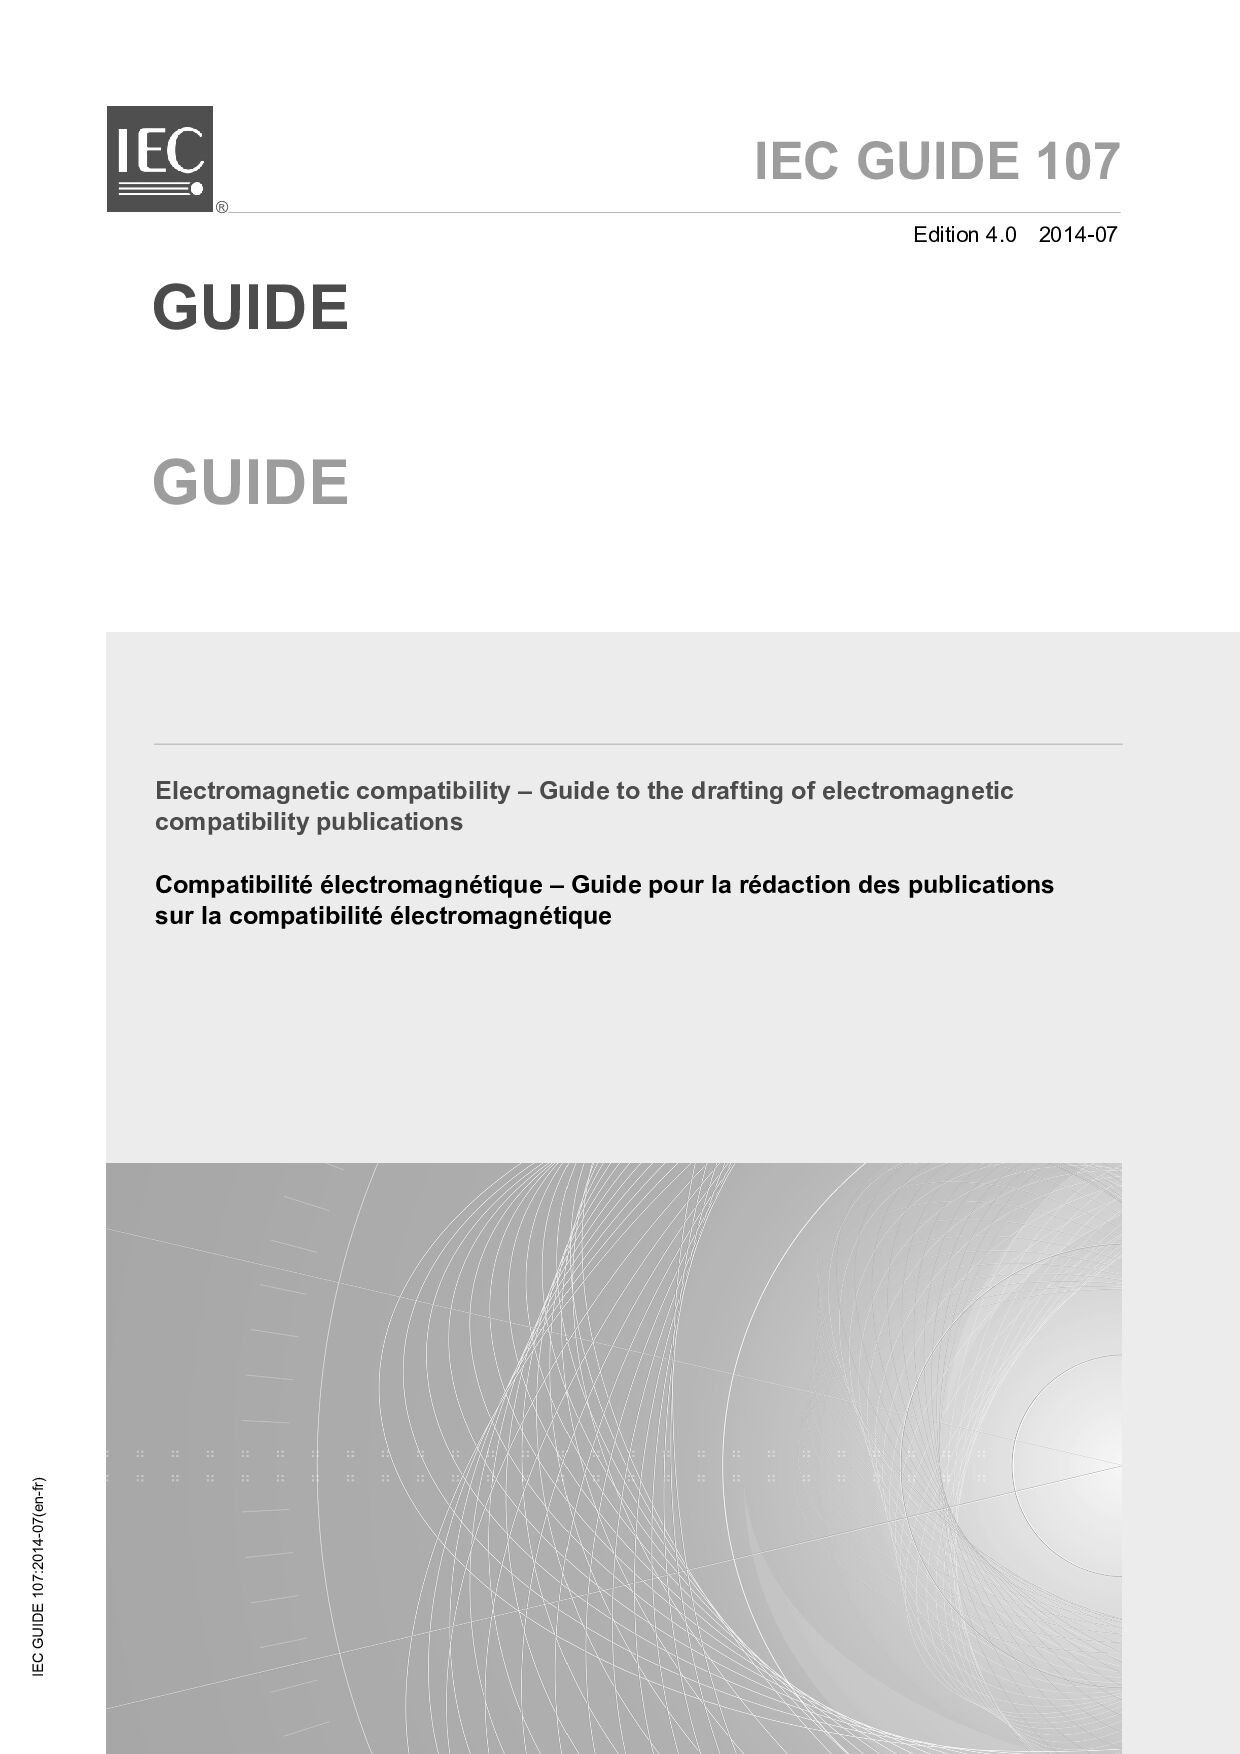 IEC GUIDE 107:2014